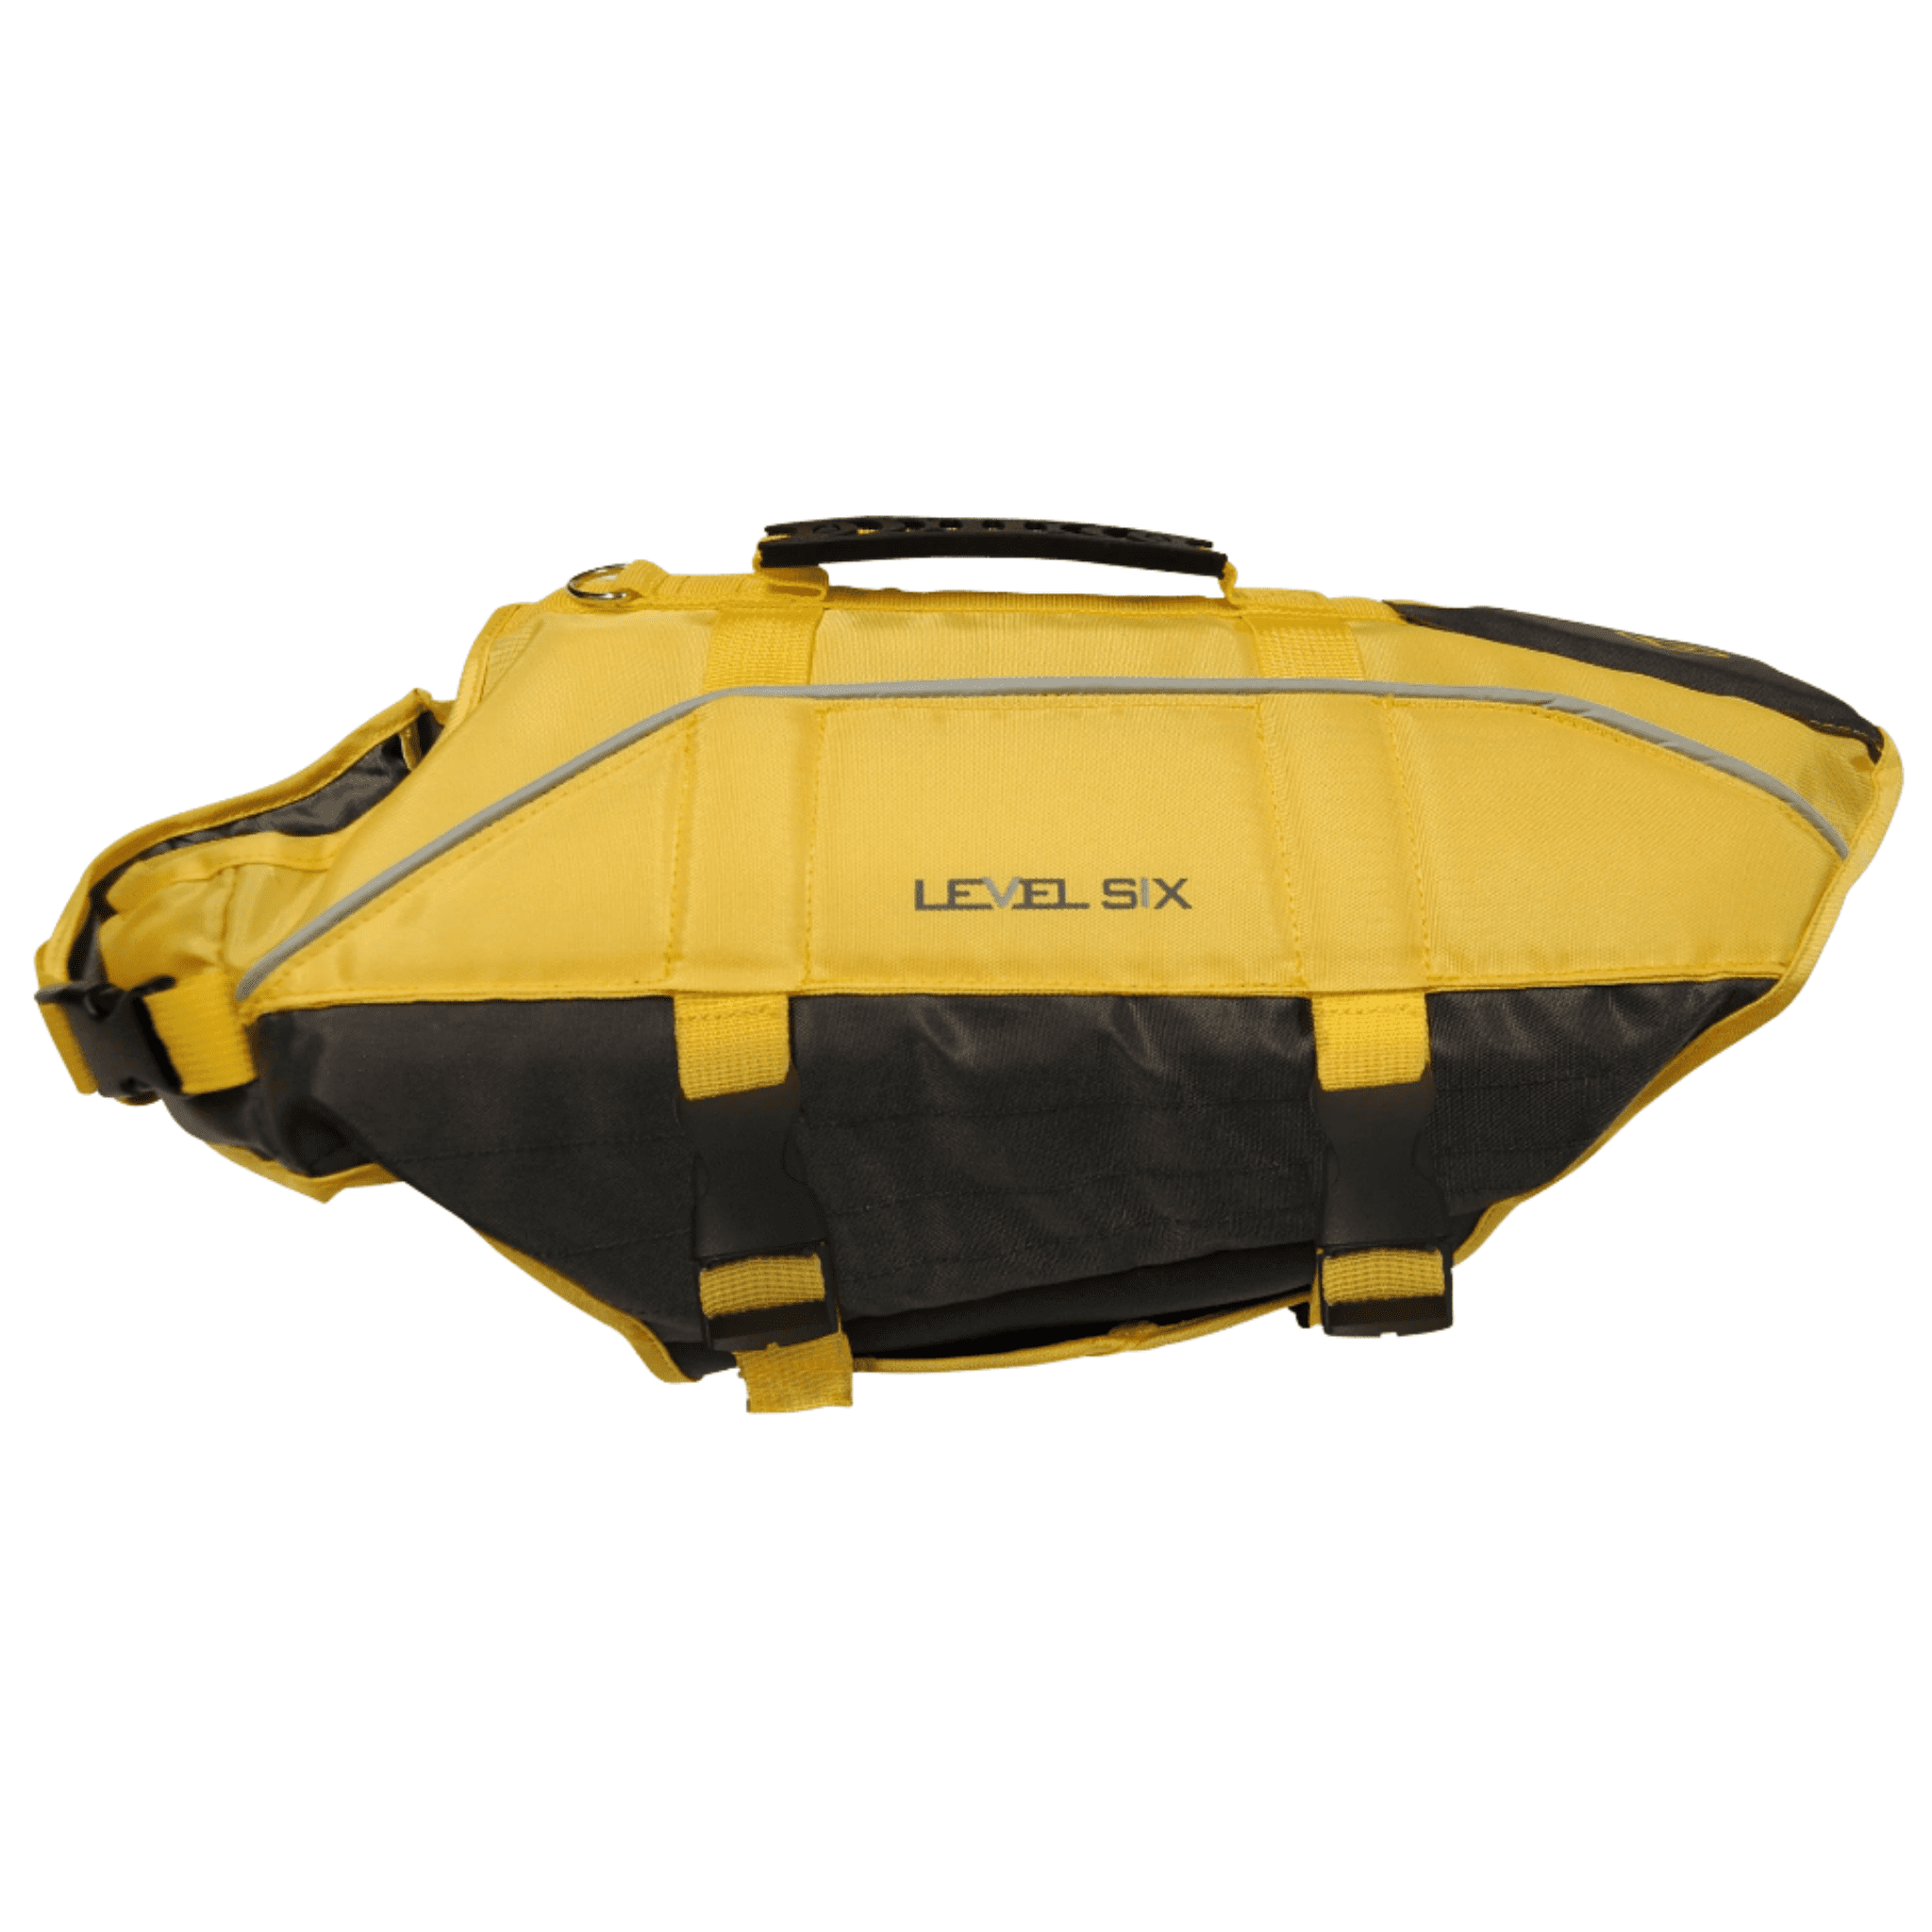 Level Six Paddling Gear – Ottawa Valley Air Paddle